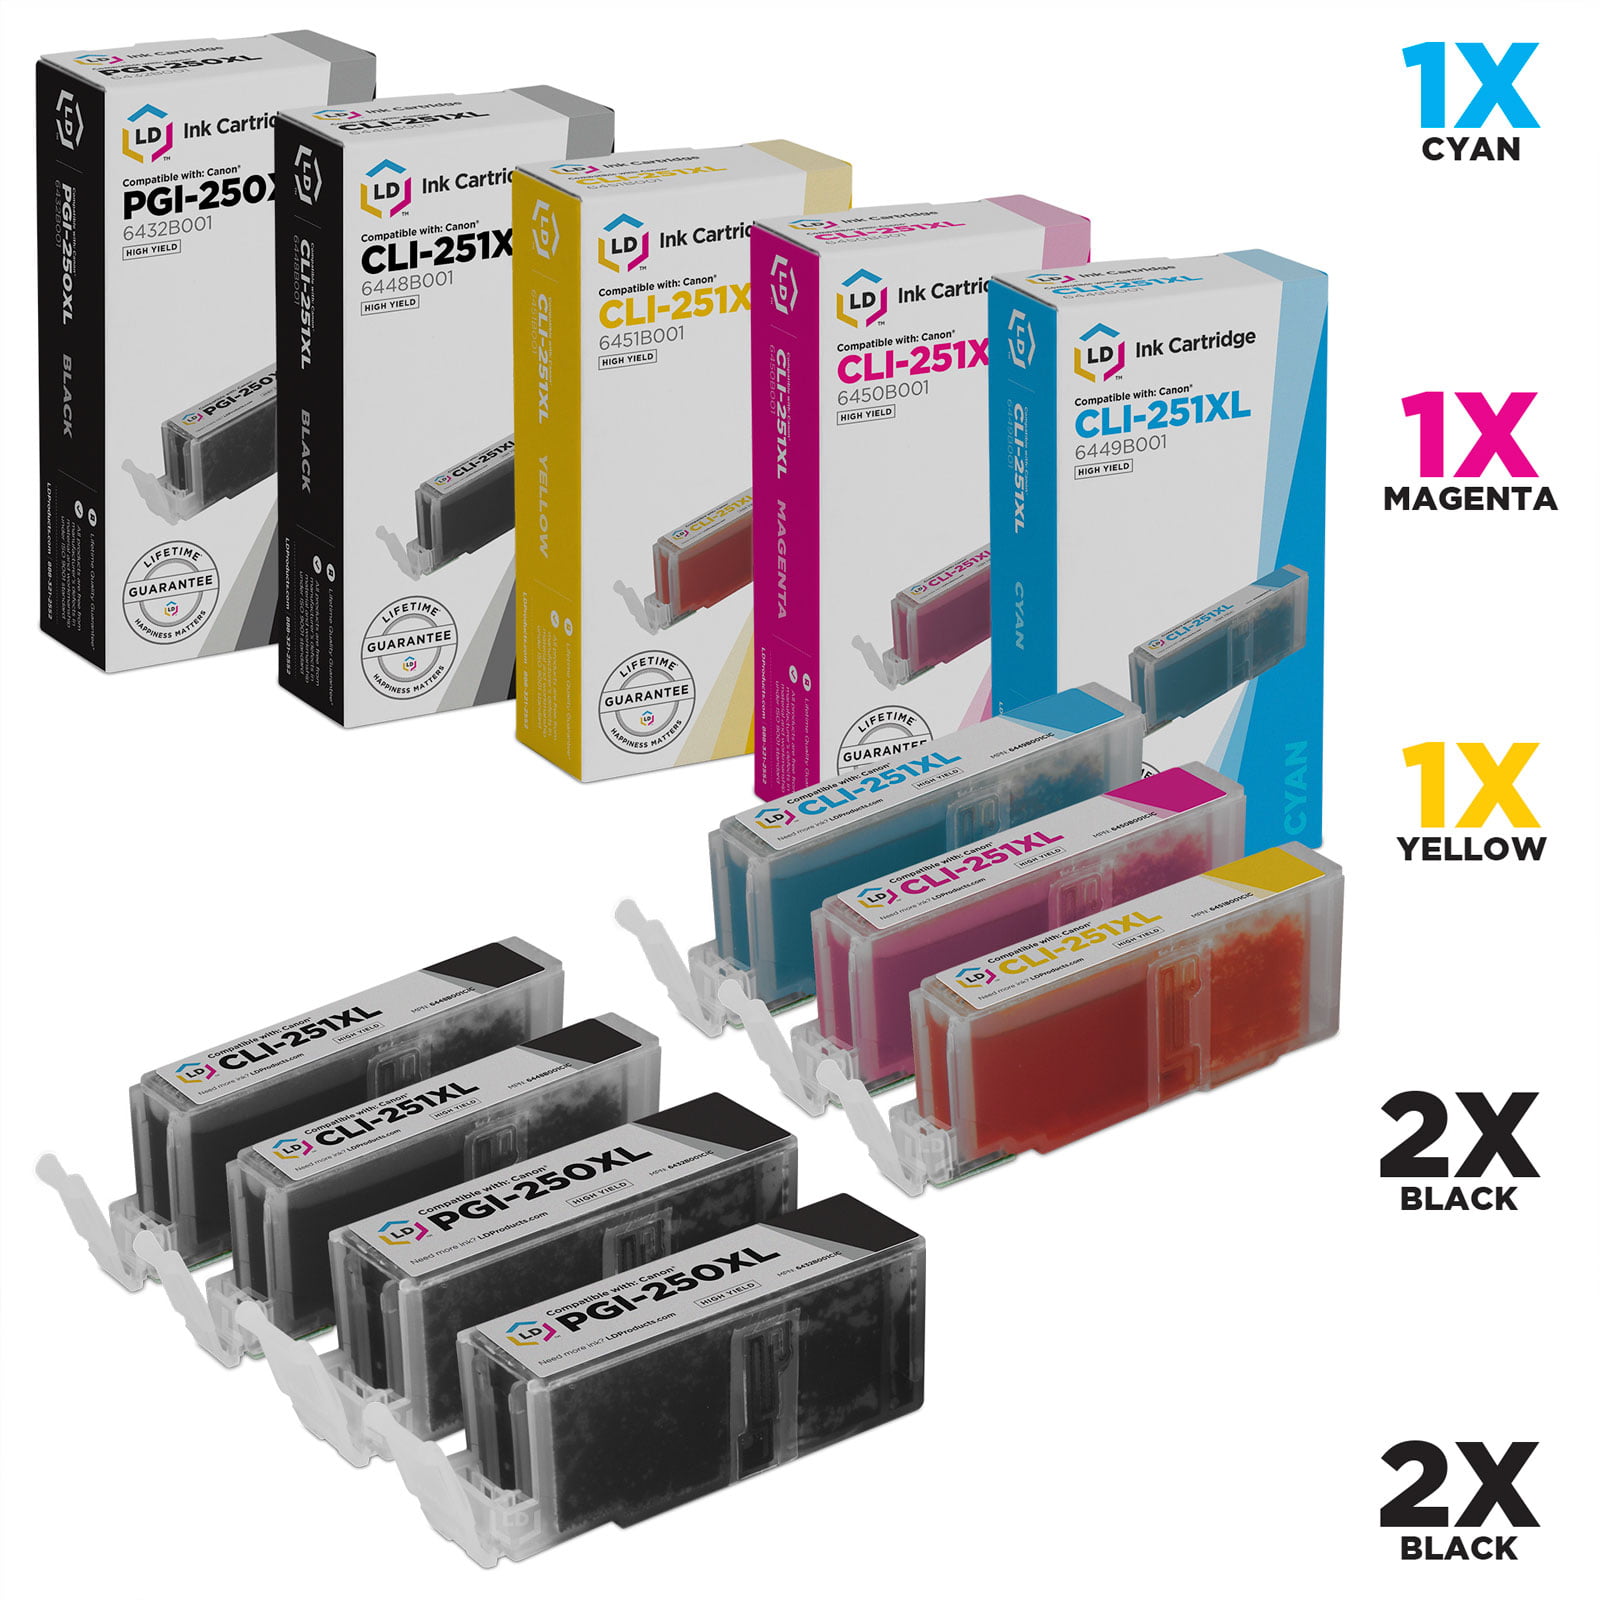 Ankink High Capacity Compatible Canon PGI-250XL CLI-251XL Ink Cartridge Fit for PIXMA MX922 MX920 MG5520 MG5420 MG7520 IX6820 Series Printer 250 xl PGBK 251 xl Black Cyan Magenta Yellow 5 Pack Combo 